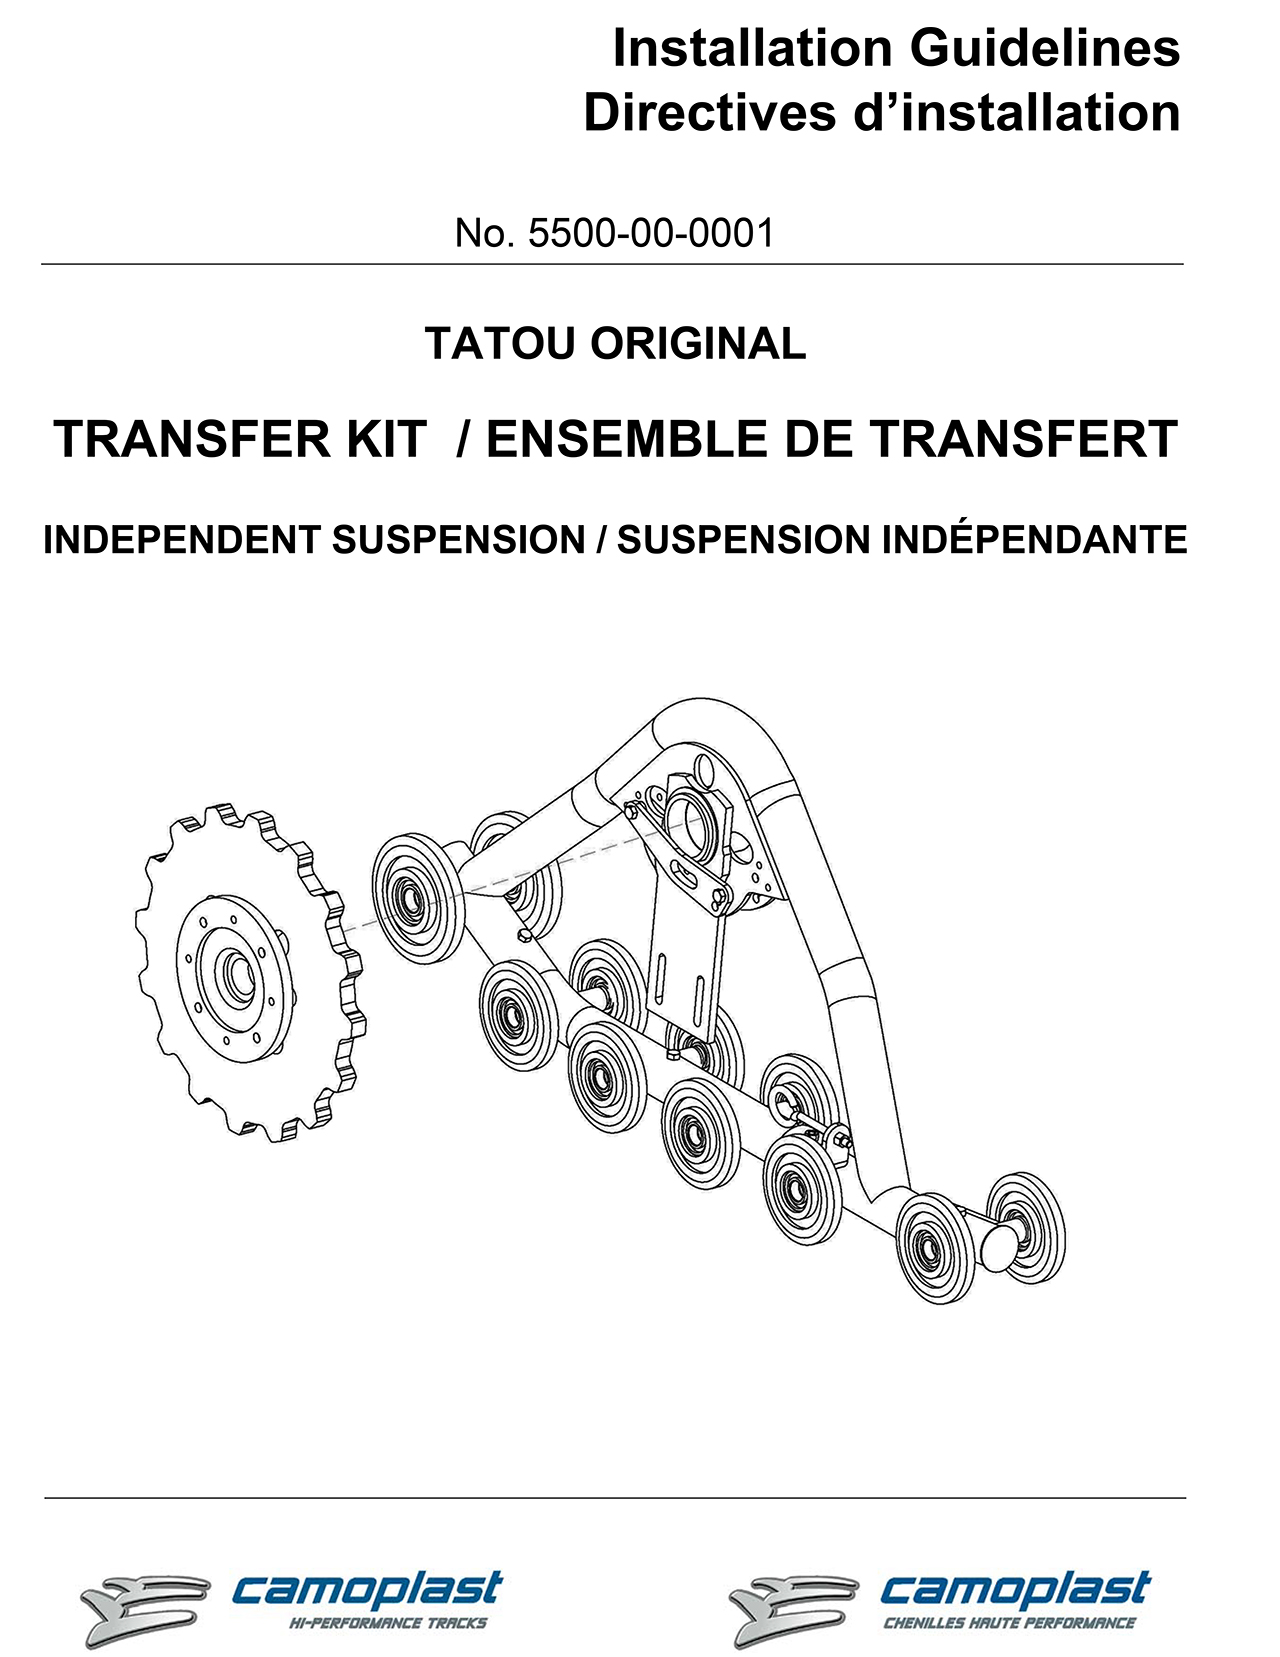 Camoplast Tatou Original Independent Suspension ATV Tracks Transfer Kit